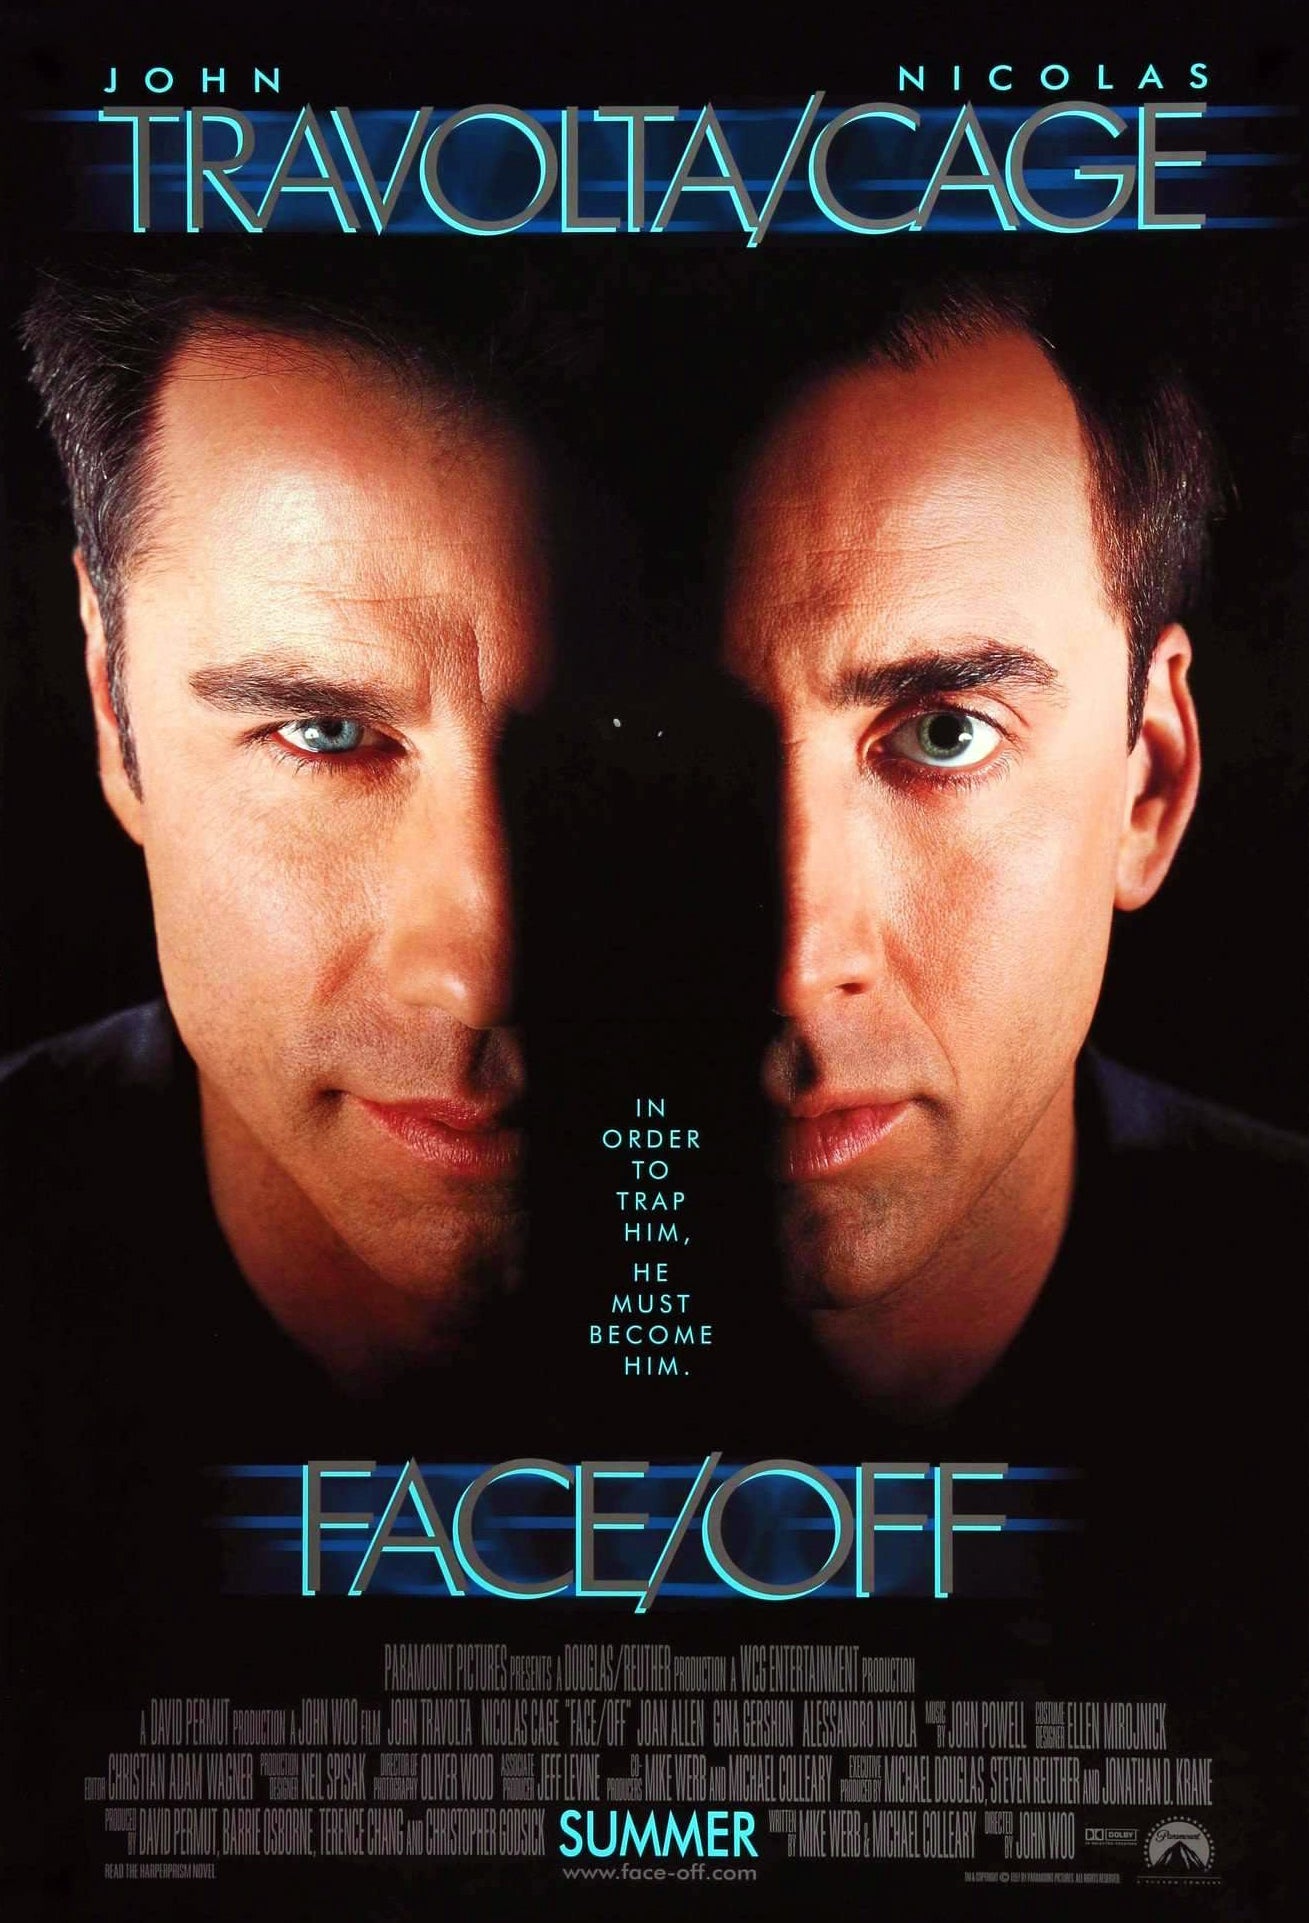 The original poster artwork for ‘Face/Off'